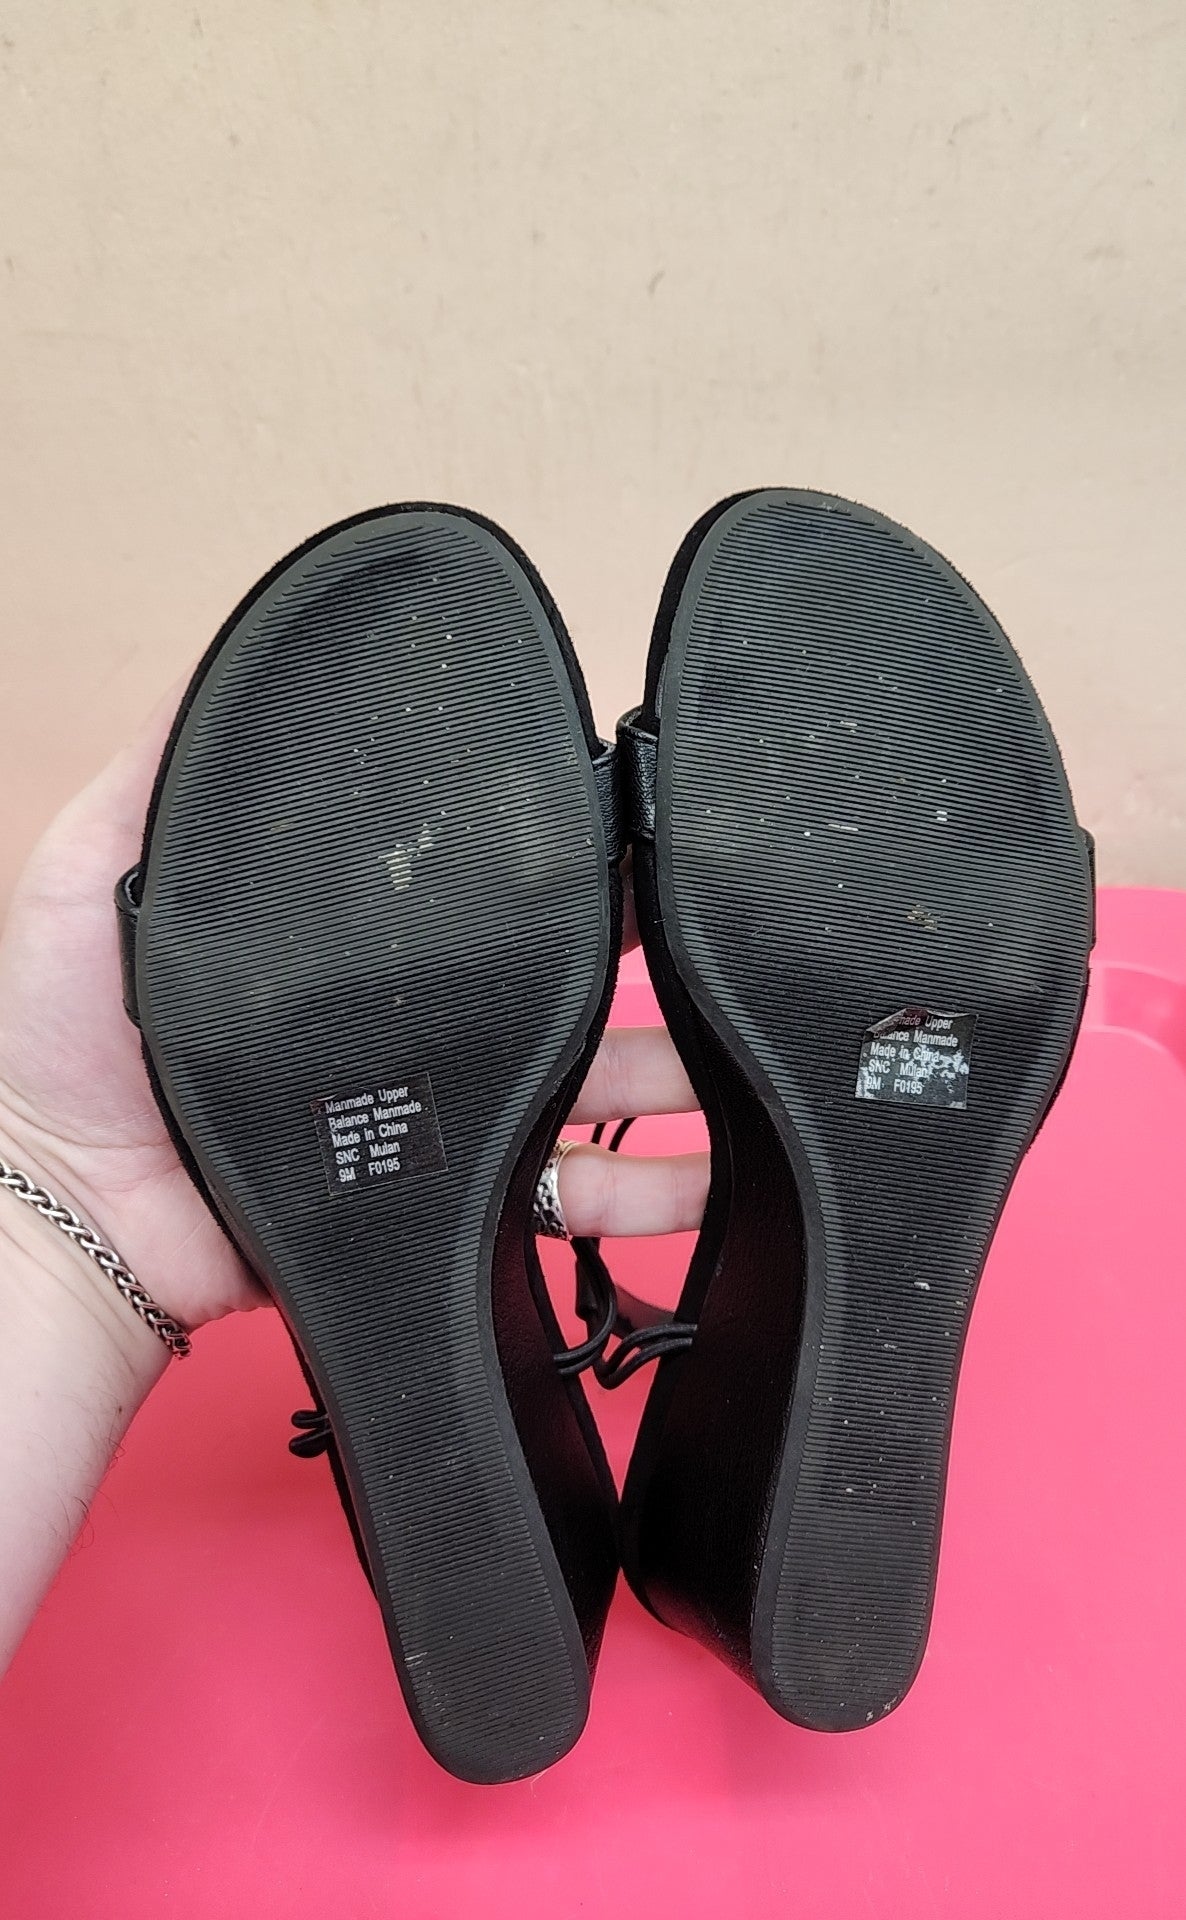 Style & Co Women's Size 9 Black Sandals